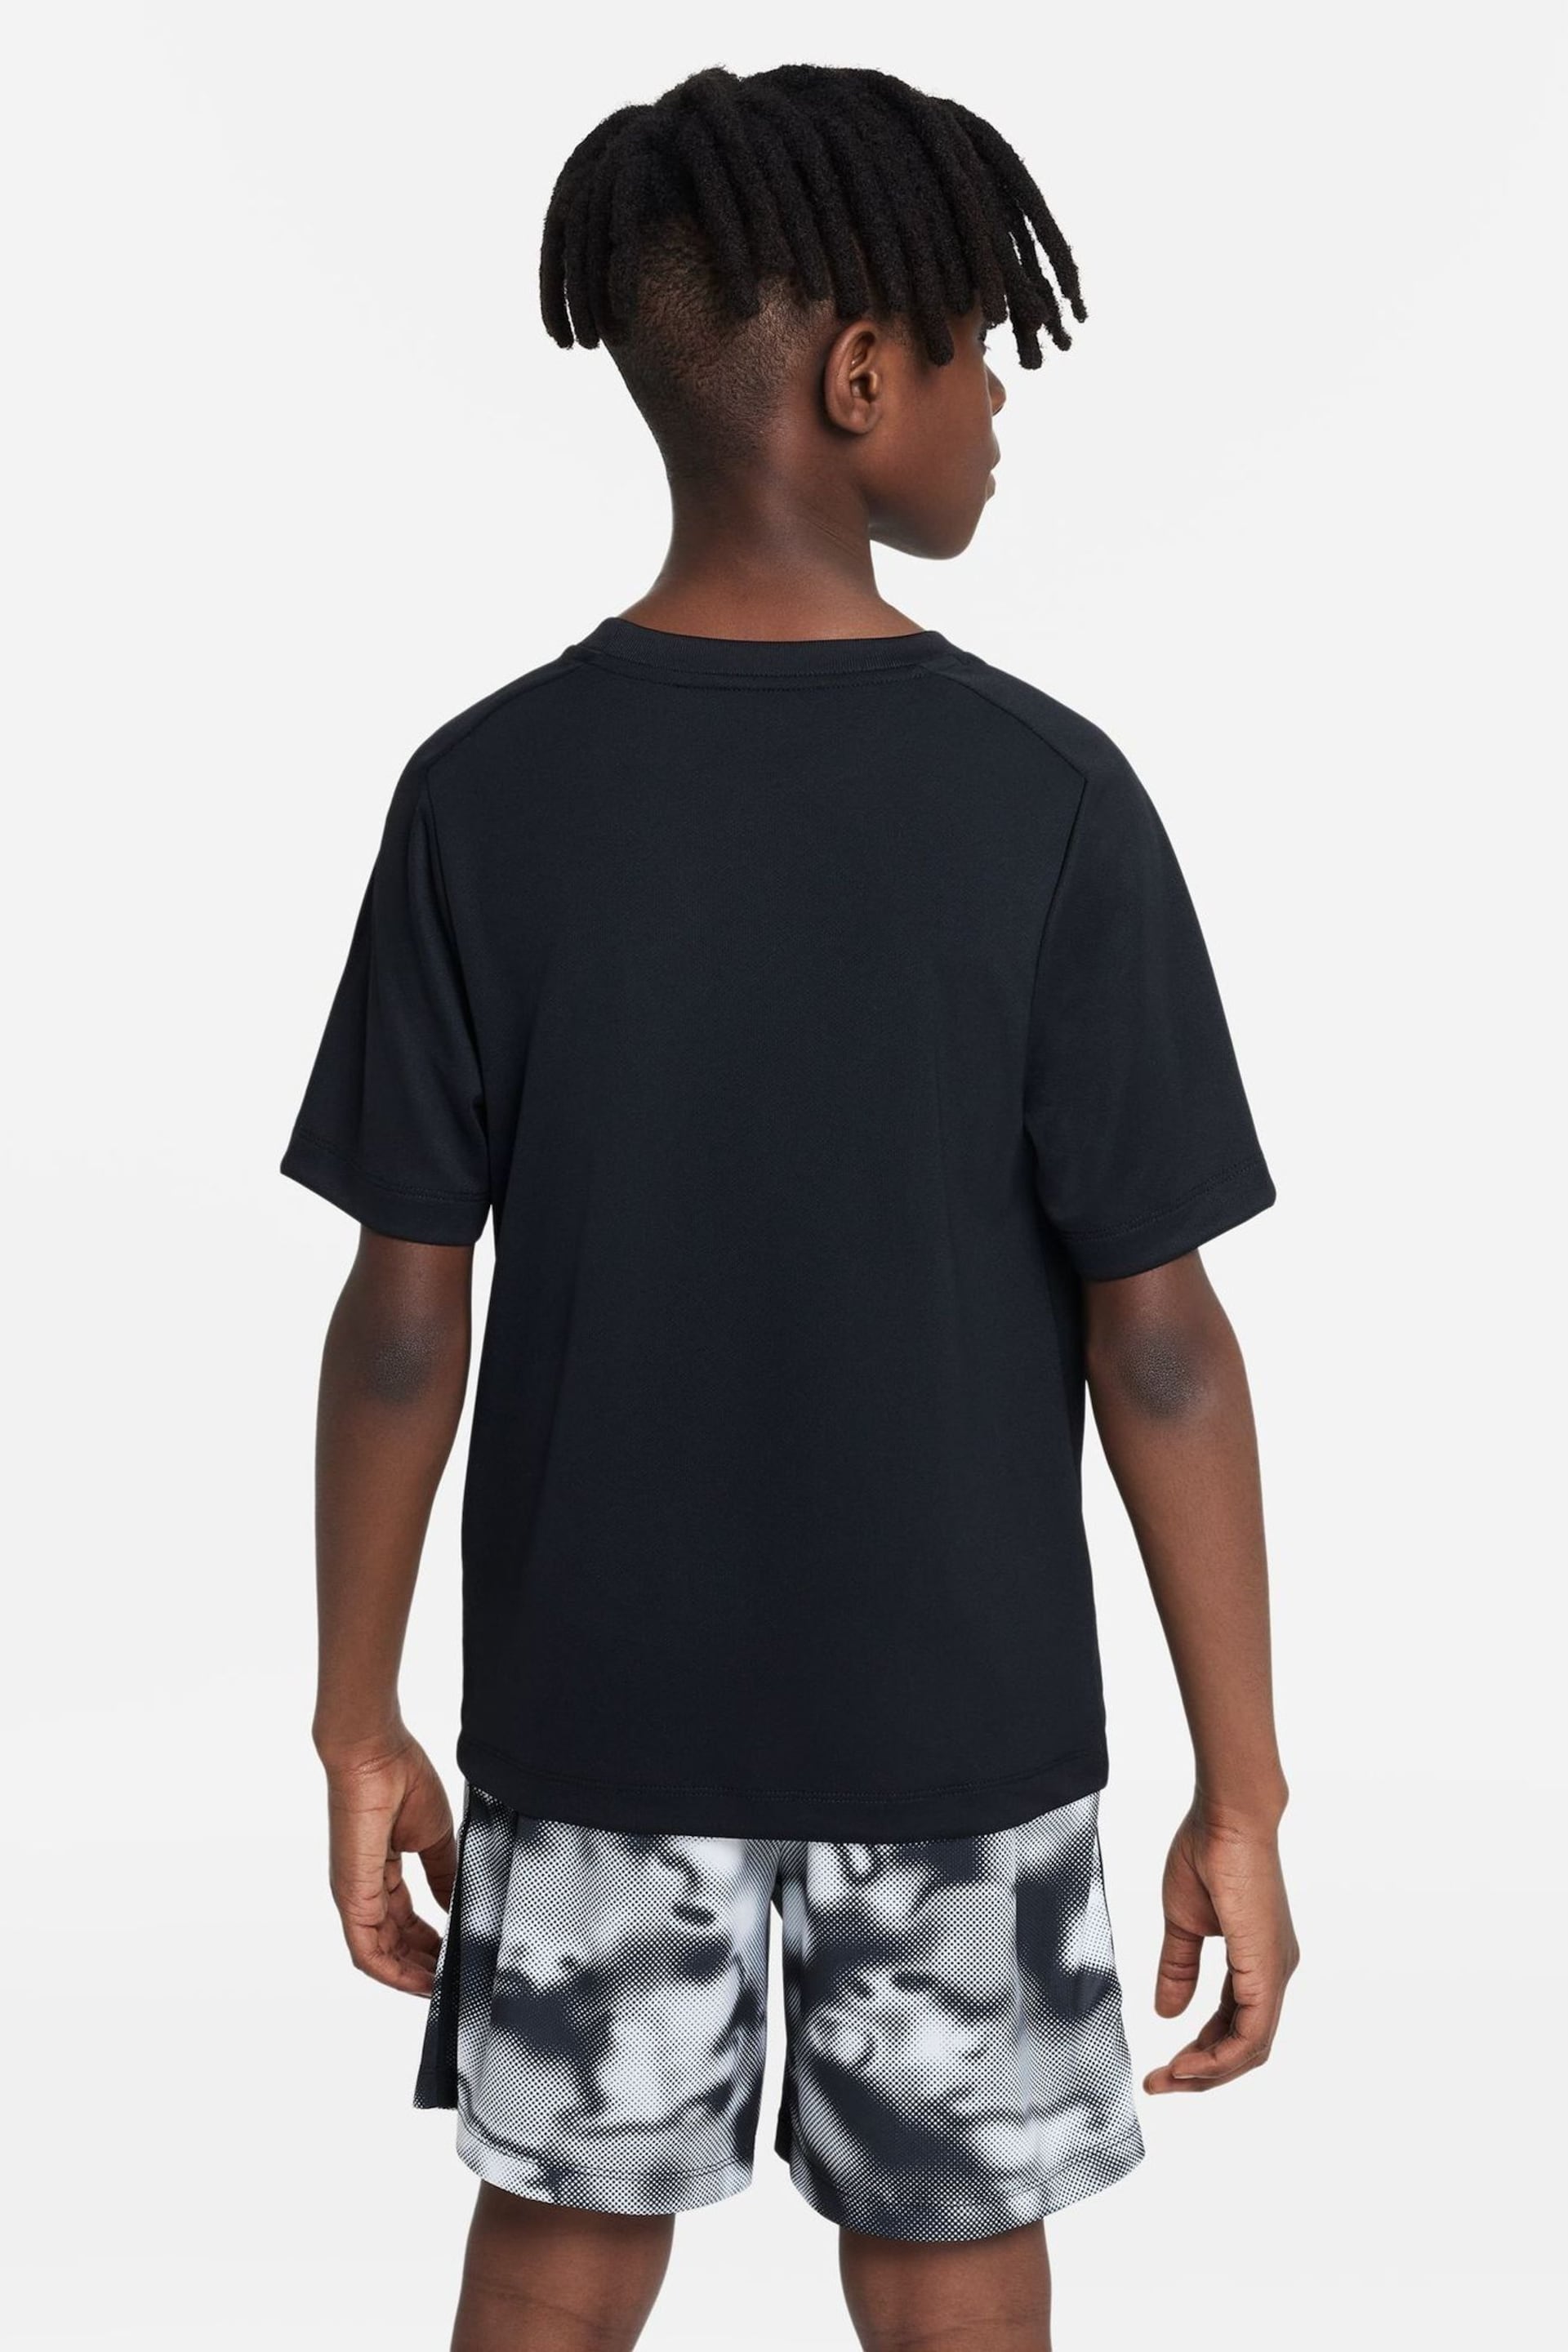 Nike Black Dri-FIT Multi Graphic Training T-Shirt - Image 2 of 4